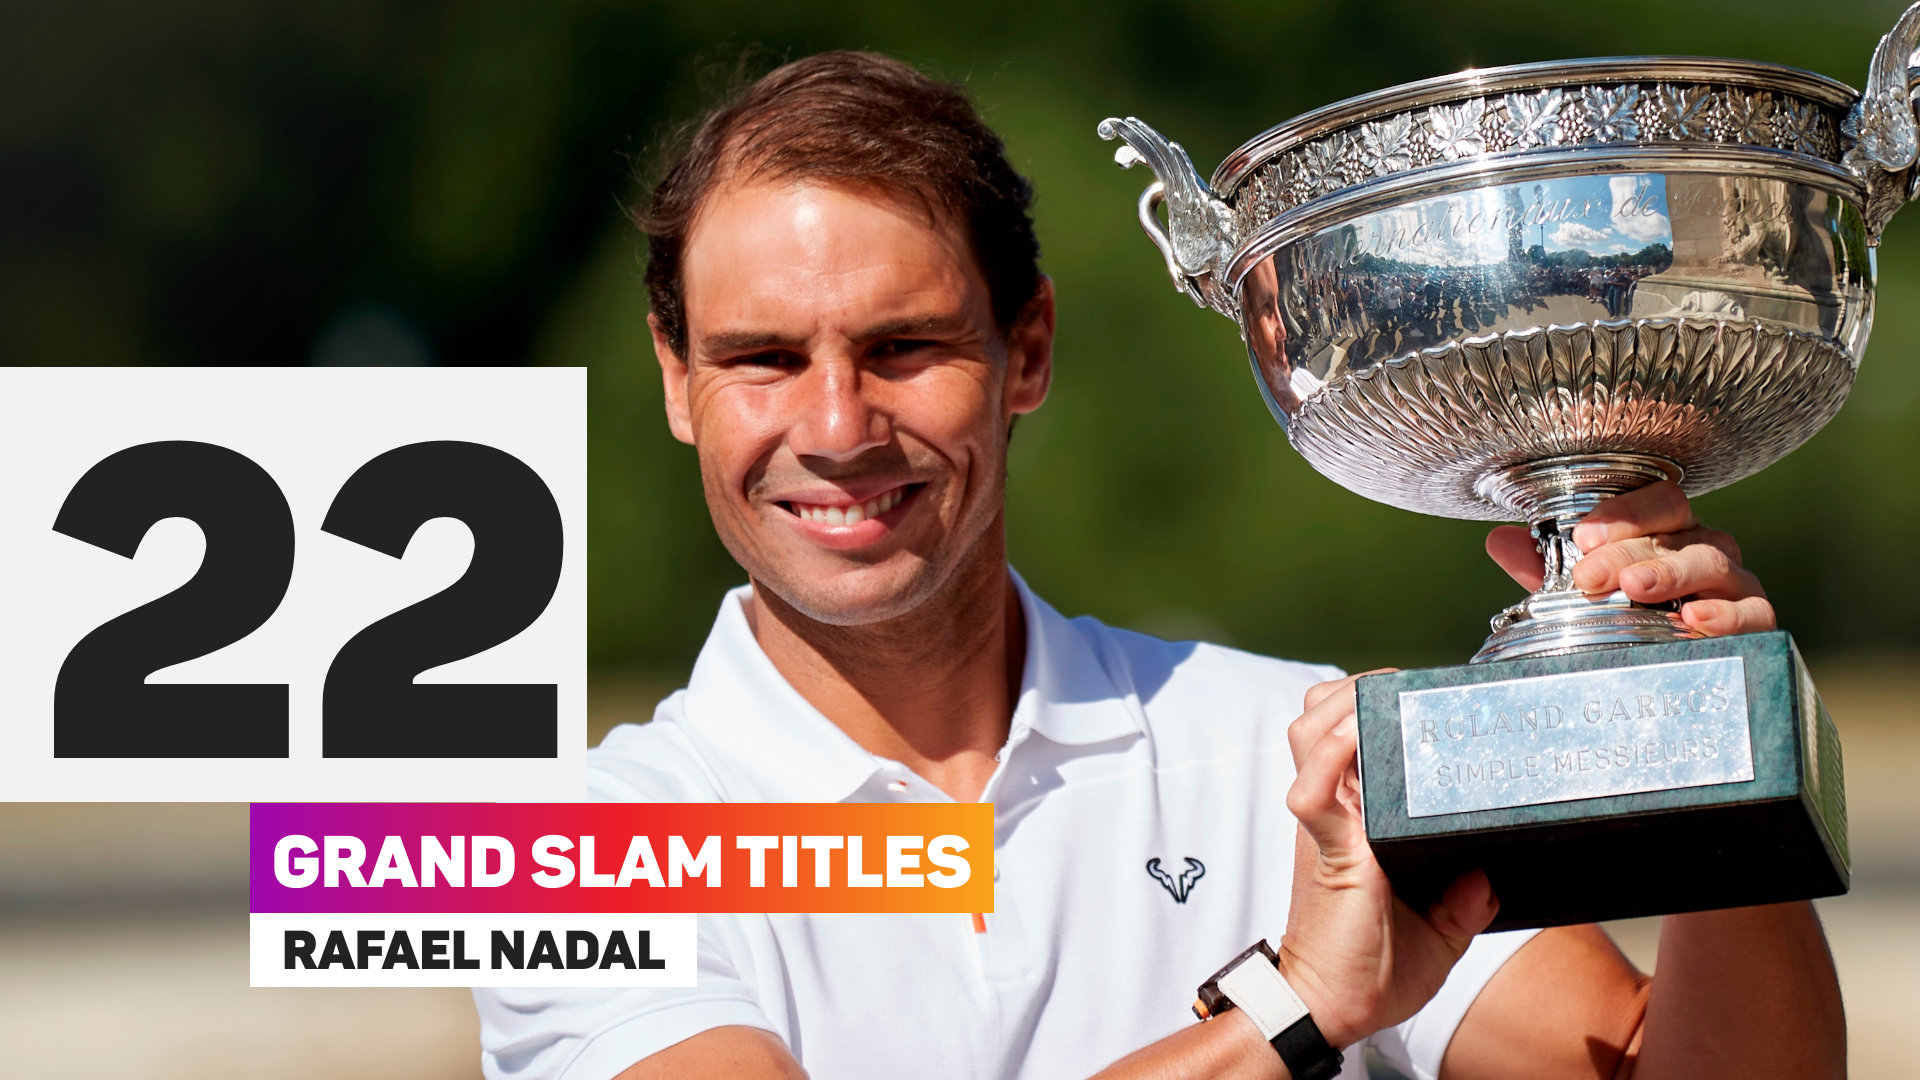 Rafael Nadal has won 22 grand slam titles